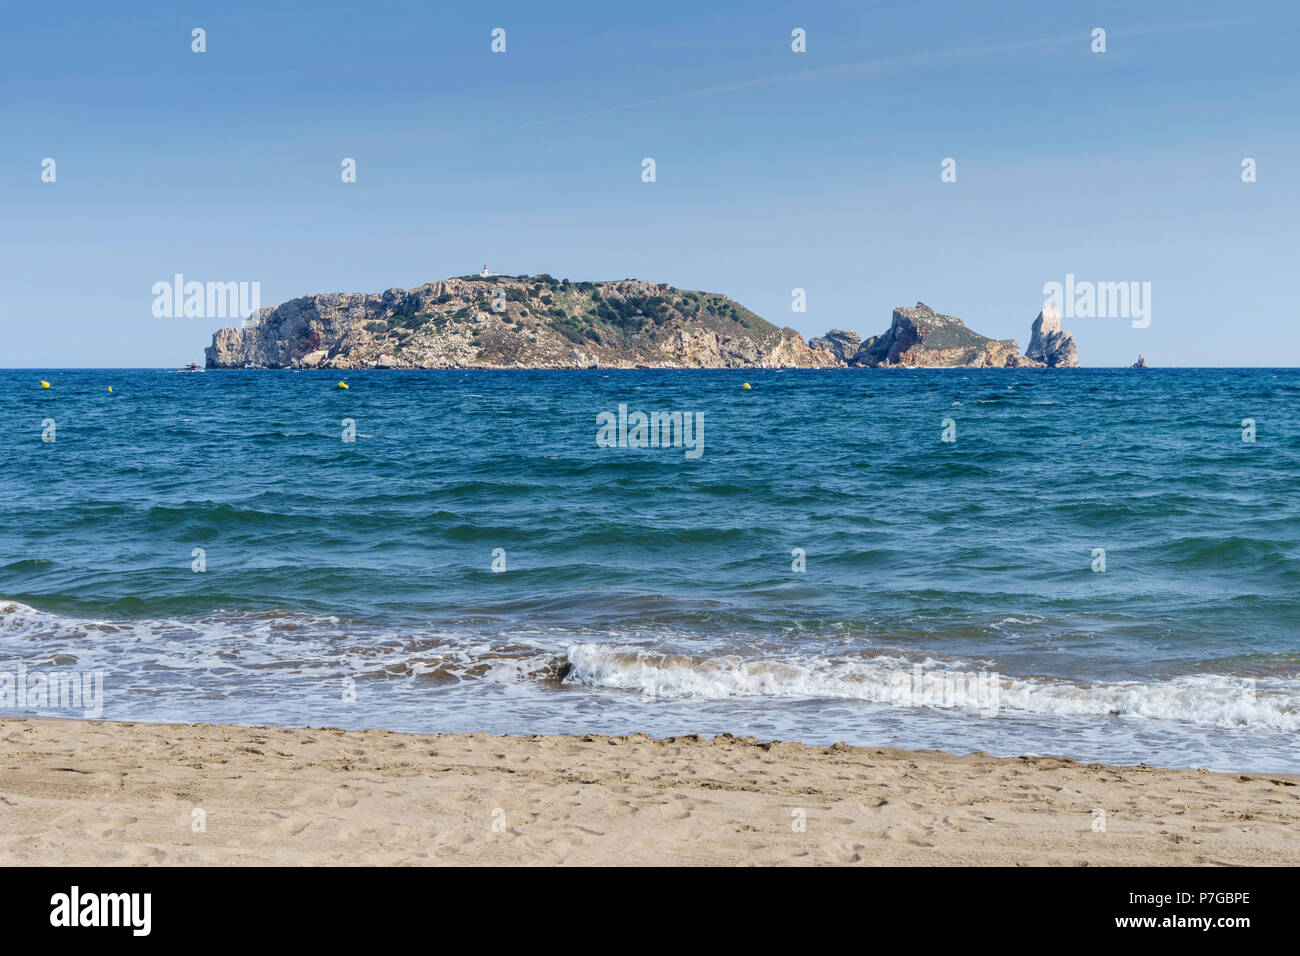 Girona, region of, Catalonia northern Spain - L'Estartit, holday resort beach. Medes Islands just offshore, La Meda. With lighthouse, Phar de la Meda. Stock Photo